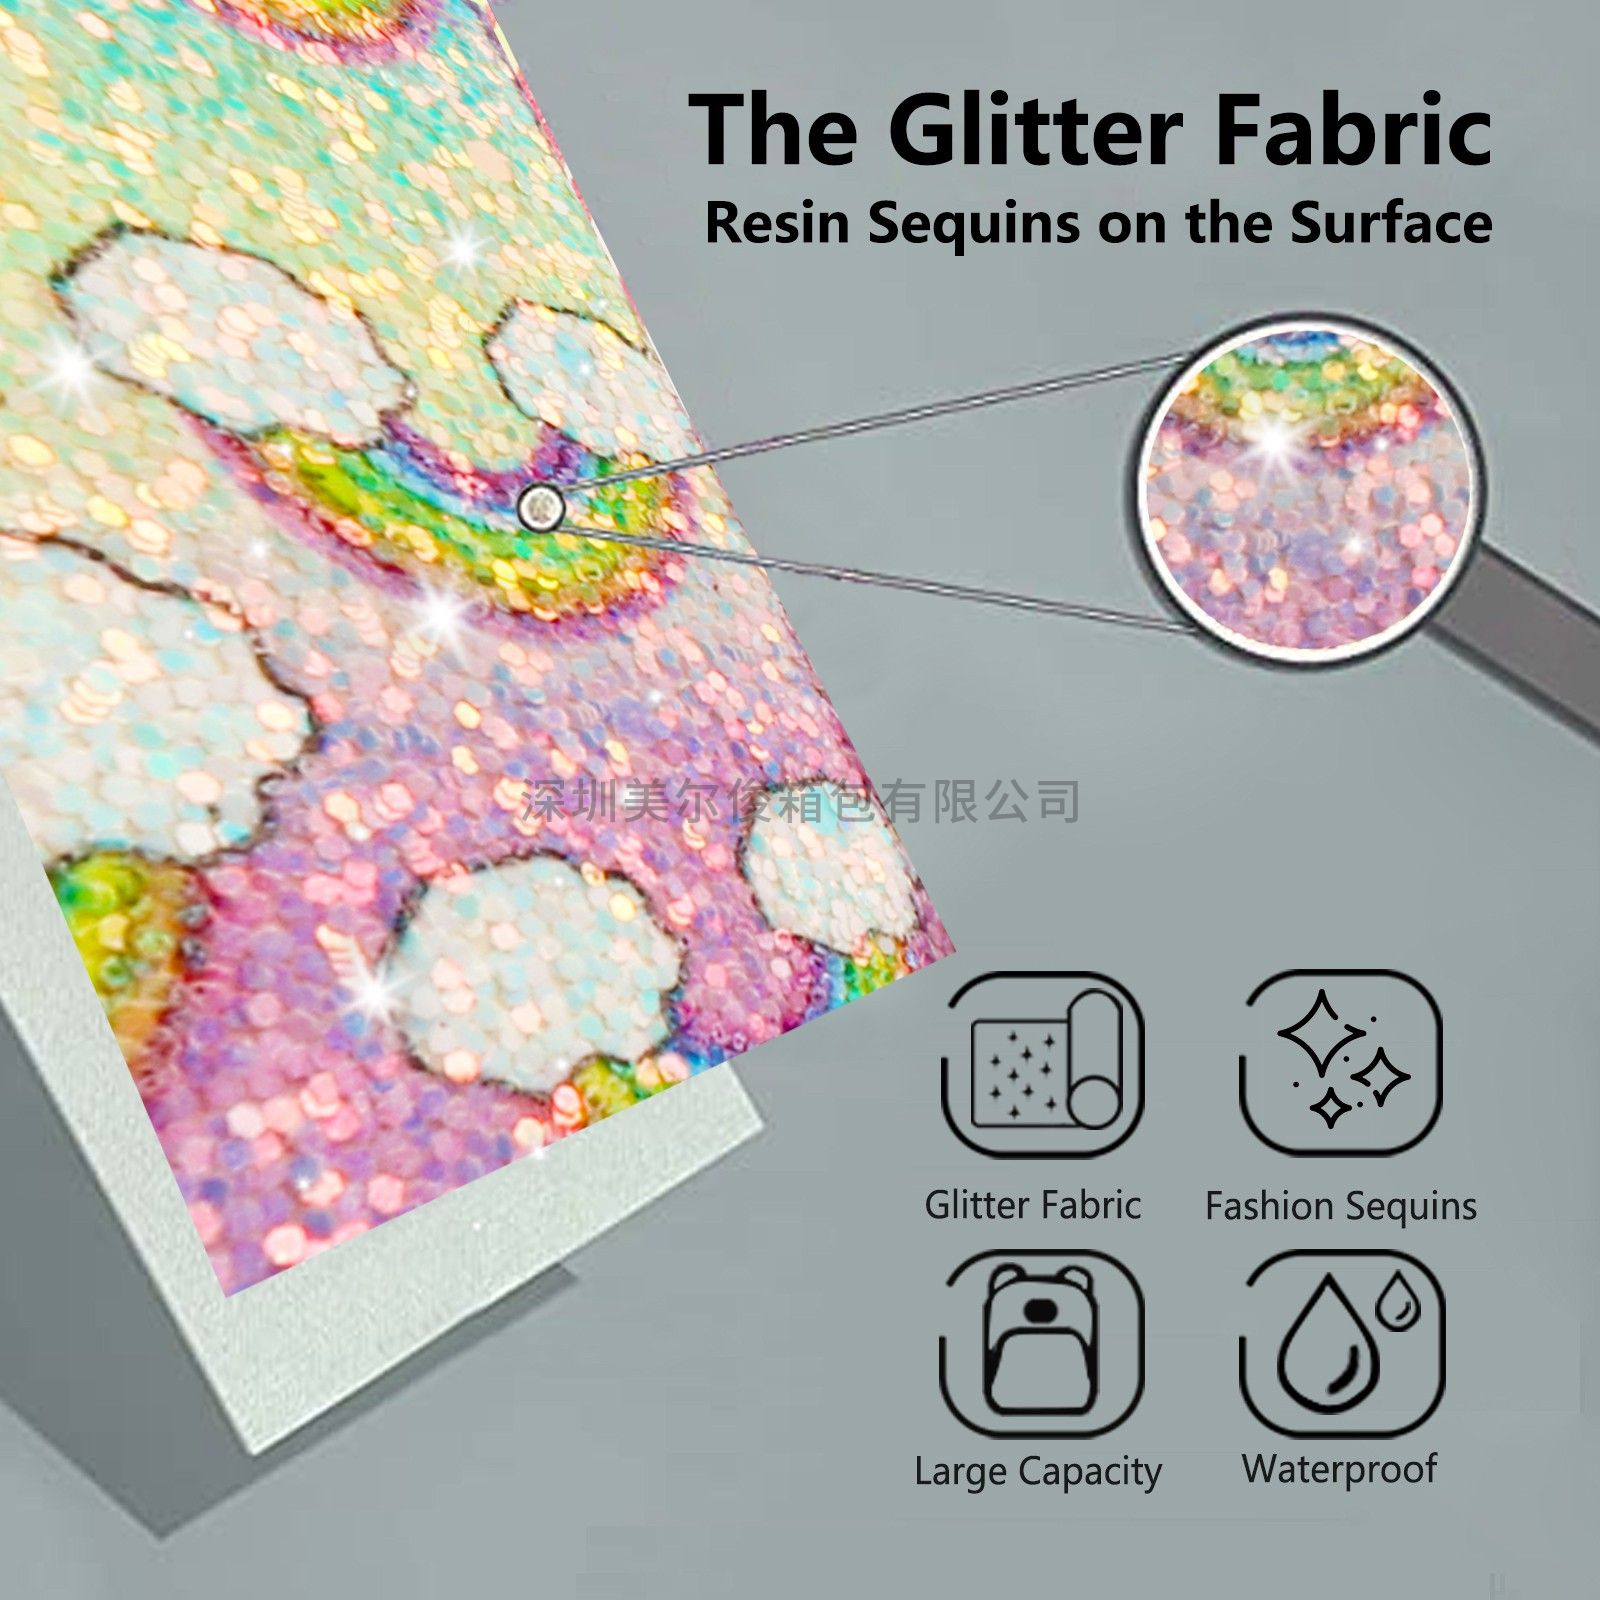 High quality Glitter Girl's Fashion Single shoulder straddle bag